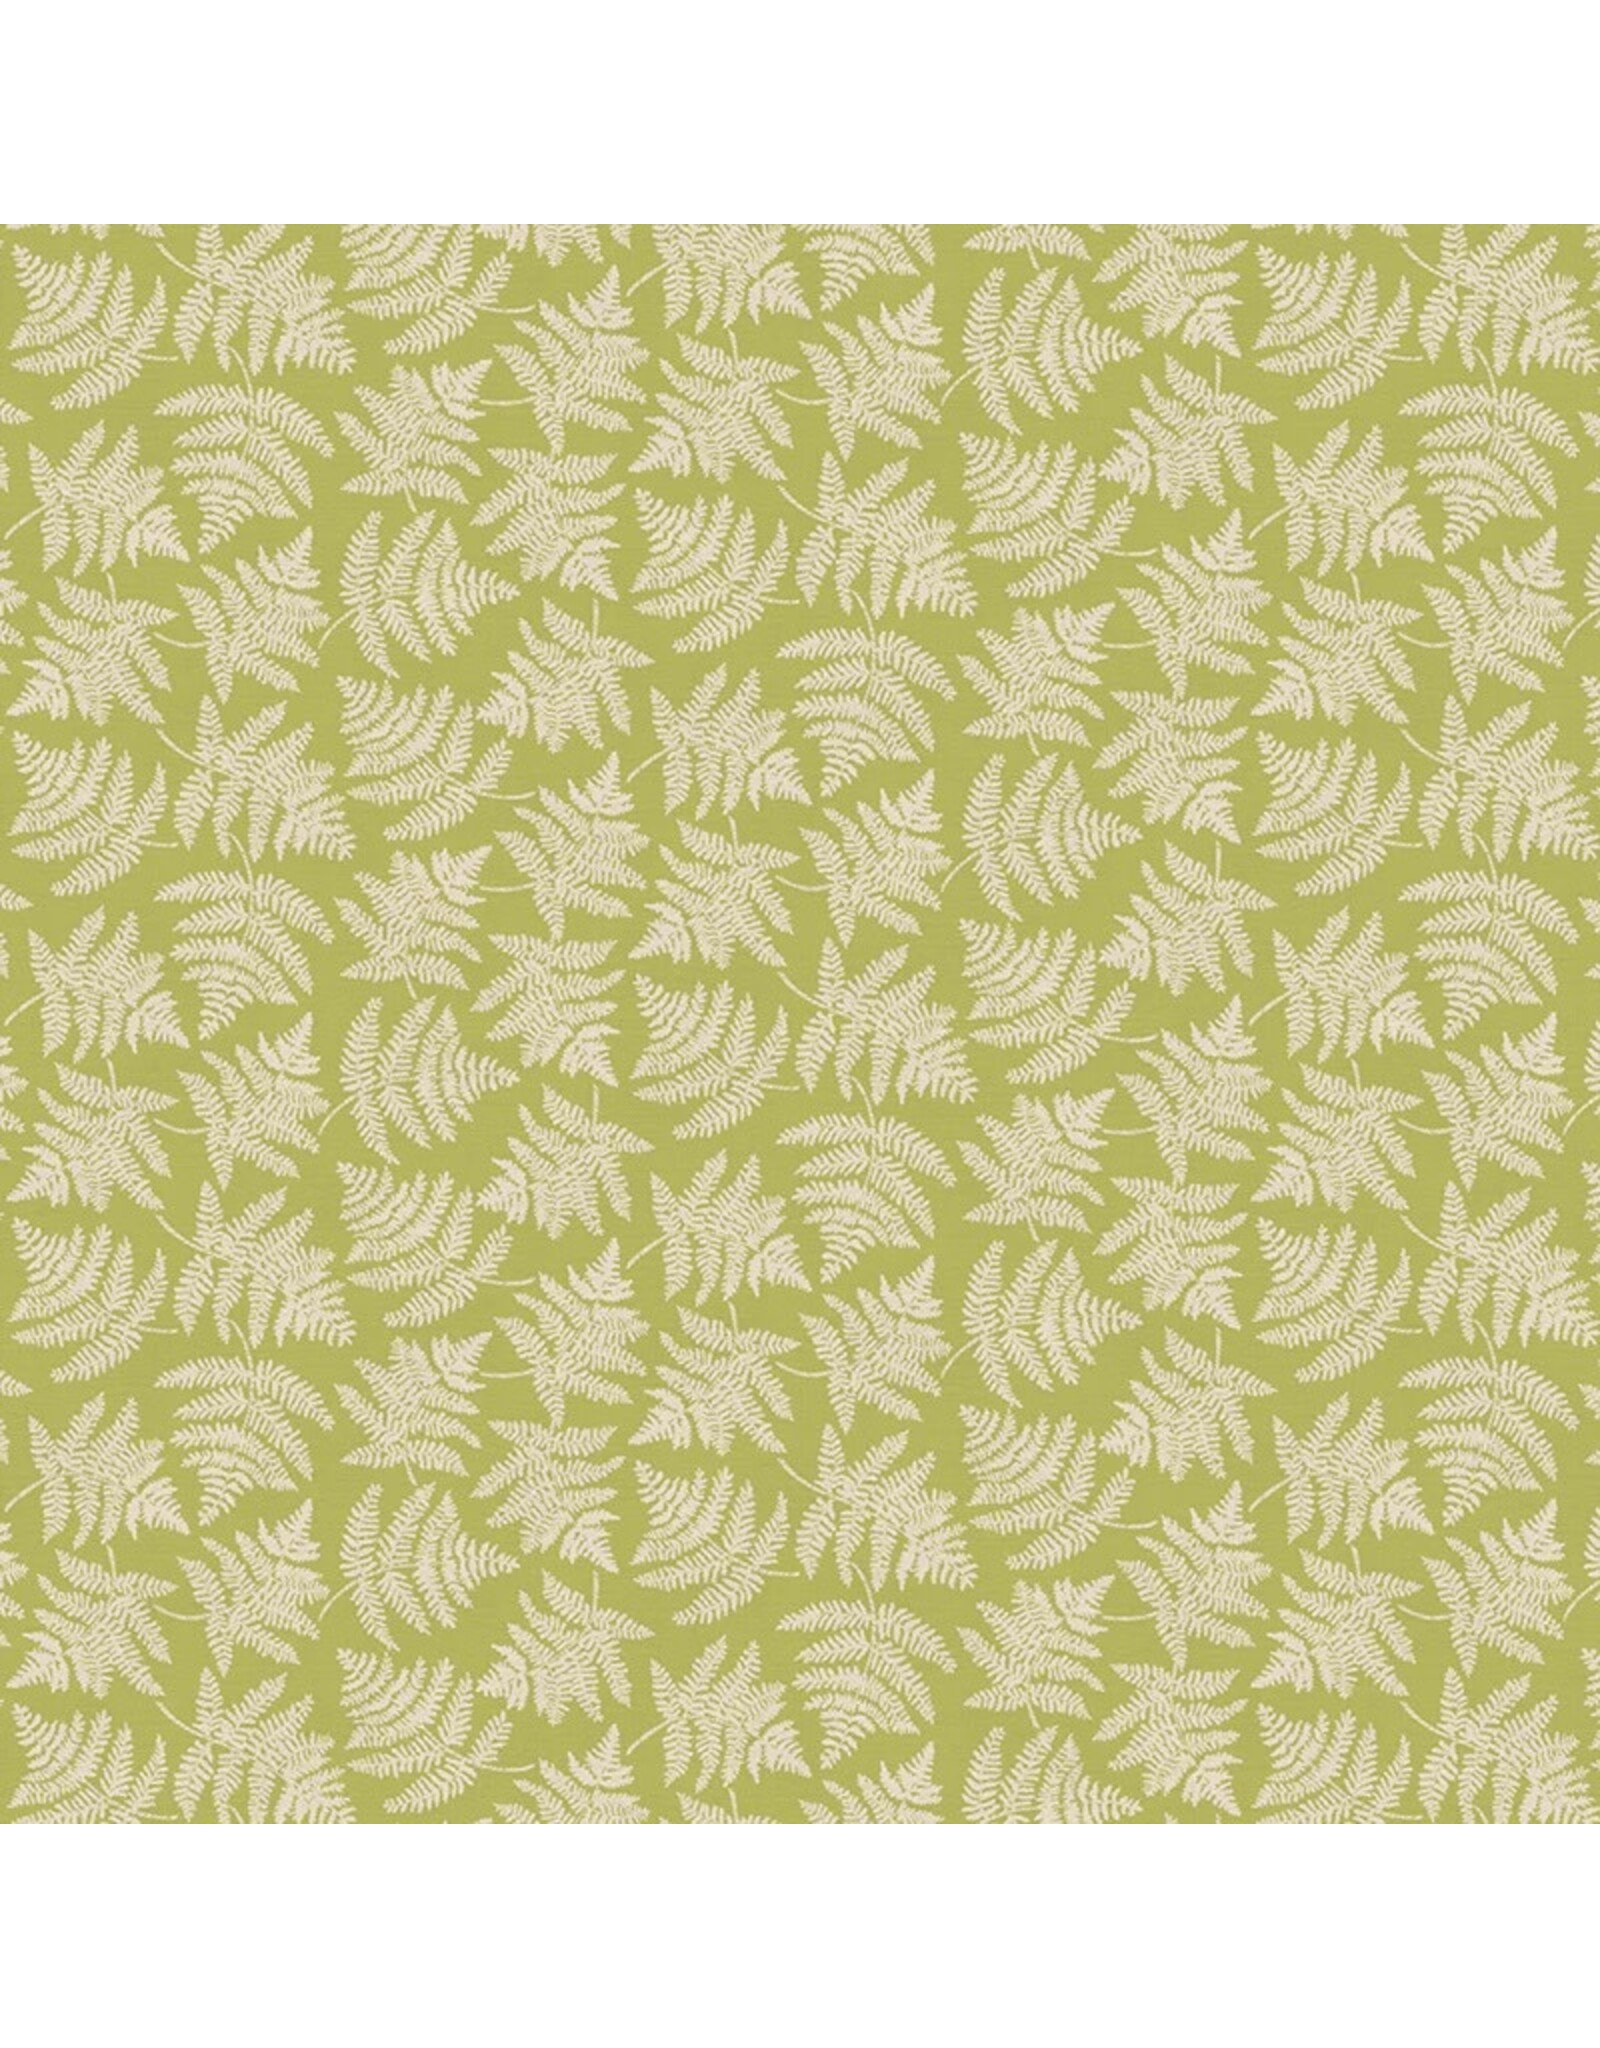 Paintbrush Studio Organic Double Gauze, Scattered Ferns in Green, Fabric Half-Yards